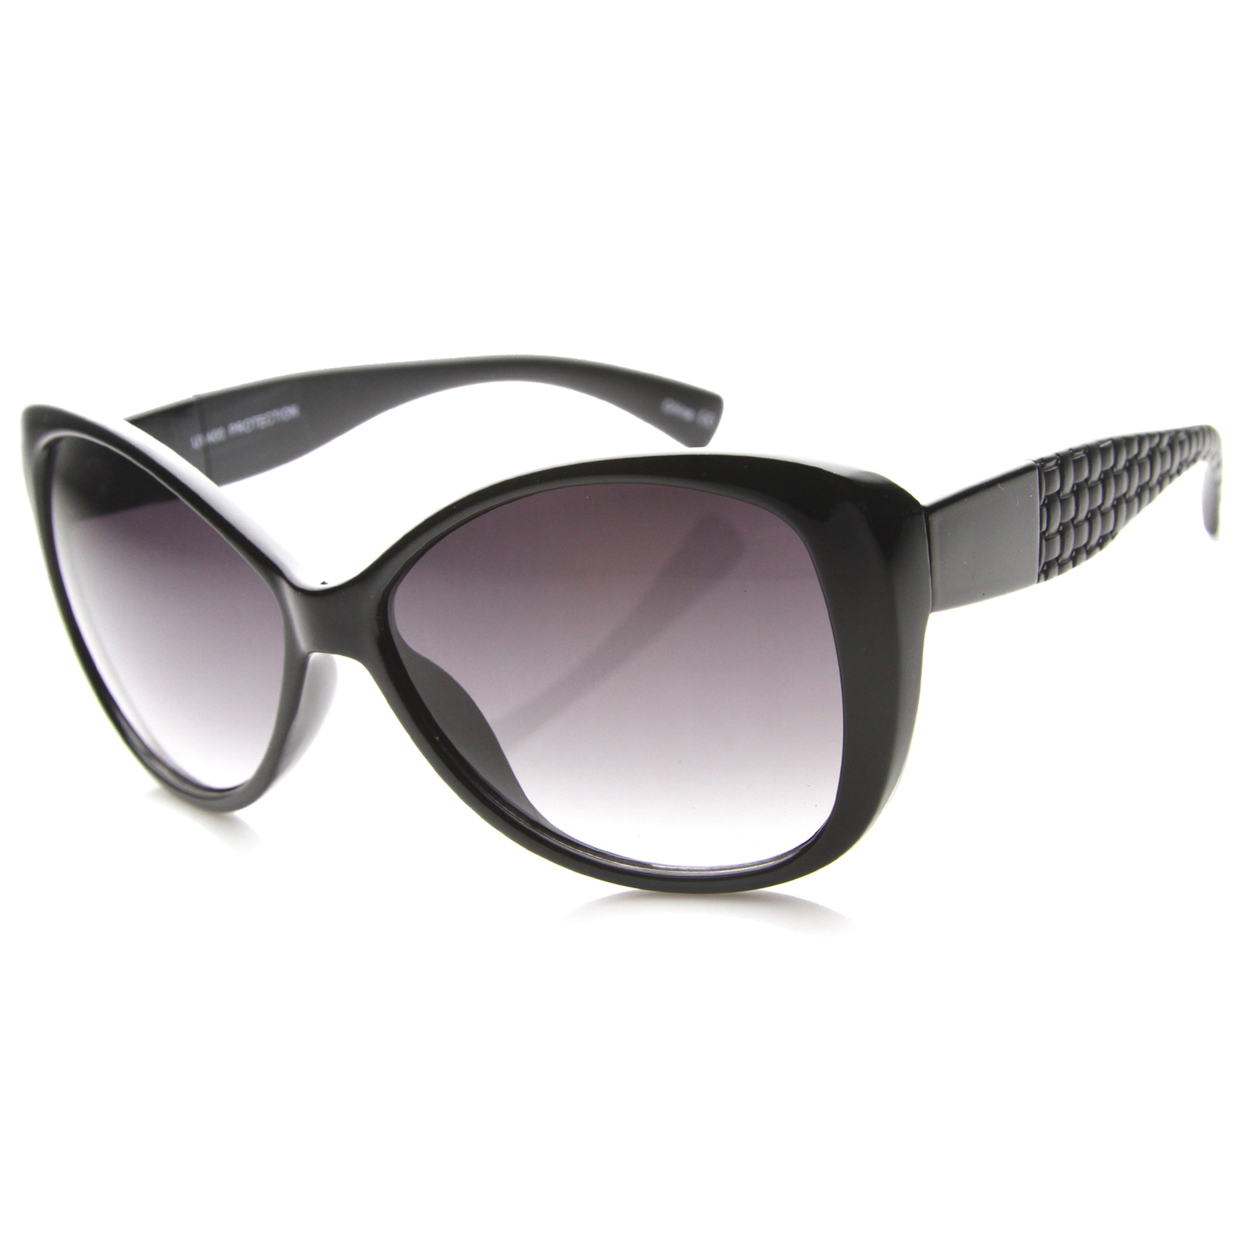 Womens Cat Eye Sunglasses With UV400 Protected Gradient Lens 9940 - Black-Tortoise / Lavender